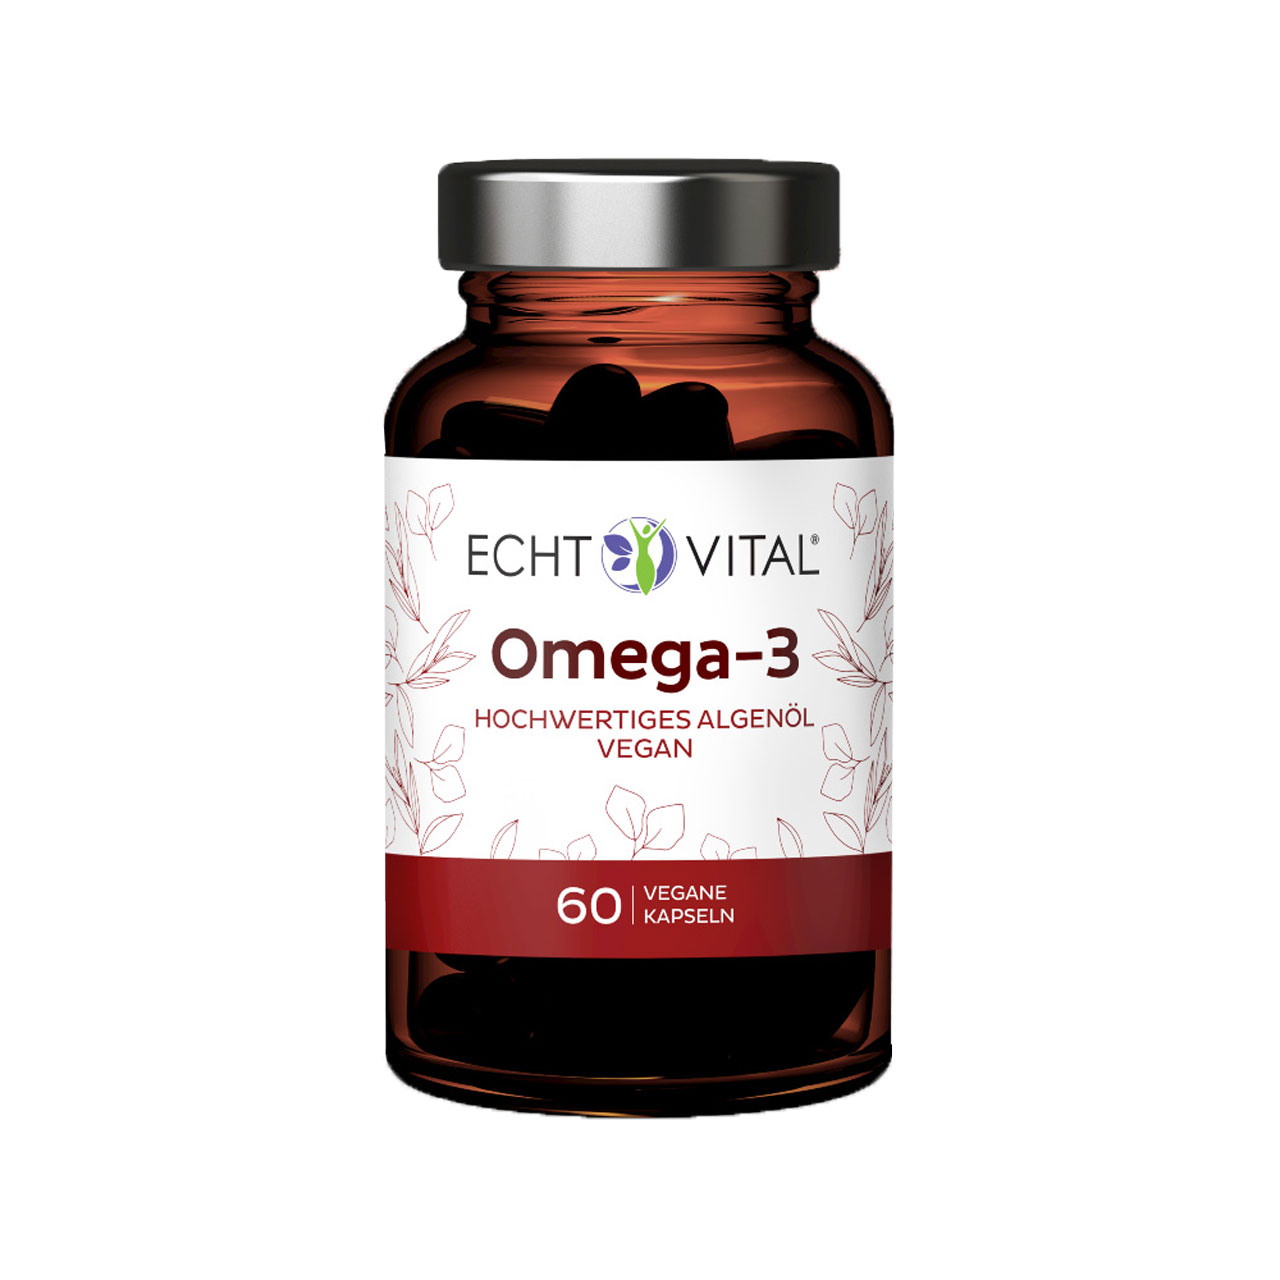 Vegane Omega 3 Kapseln von Echt Vital beinhaltet 60 Kapseln